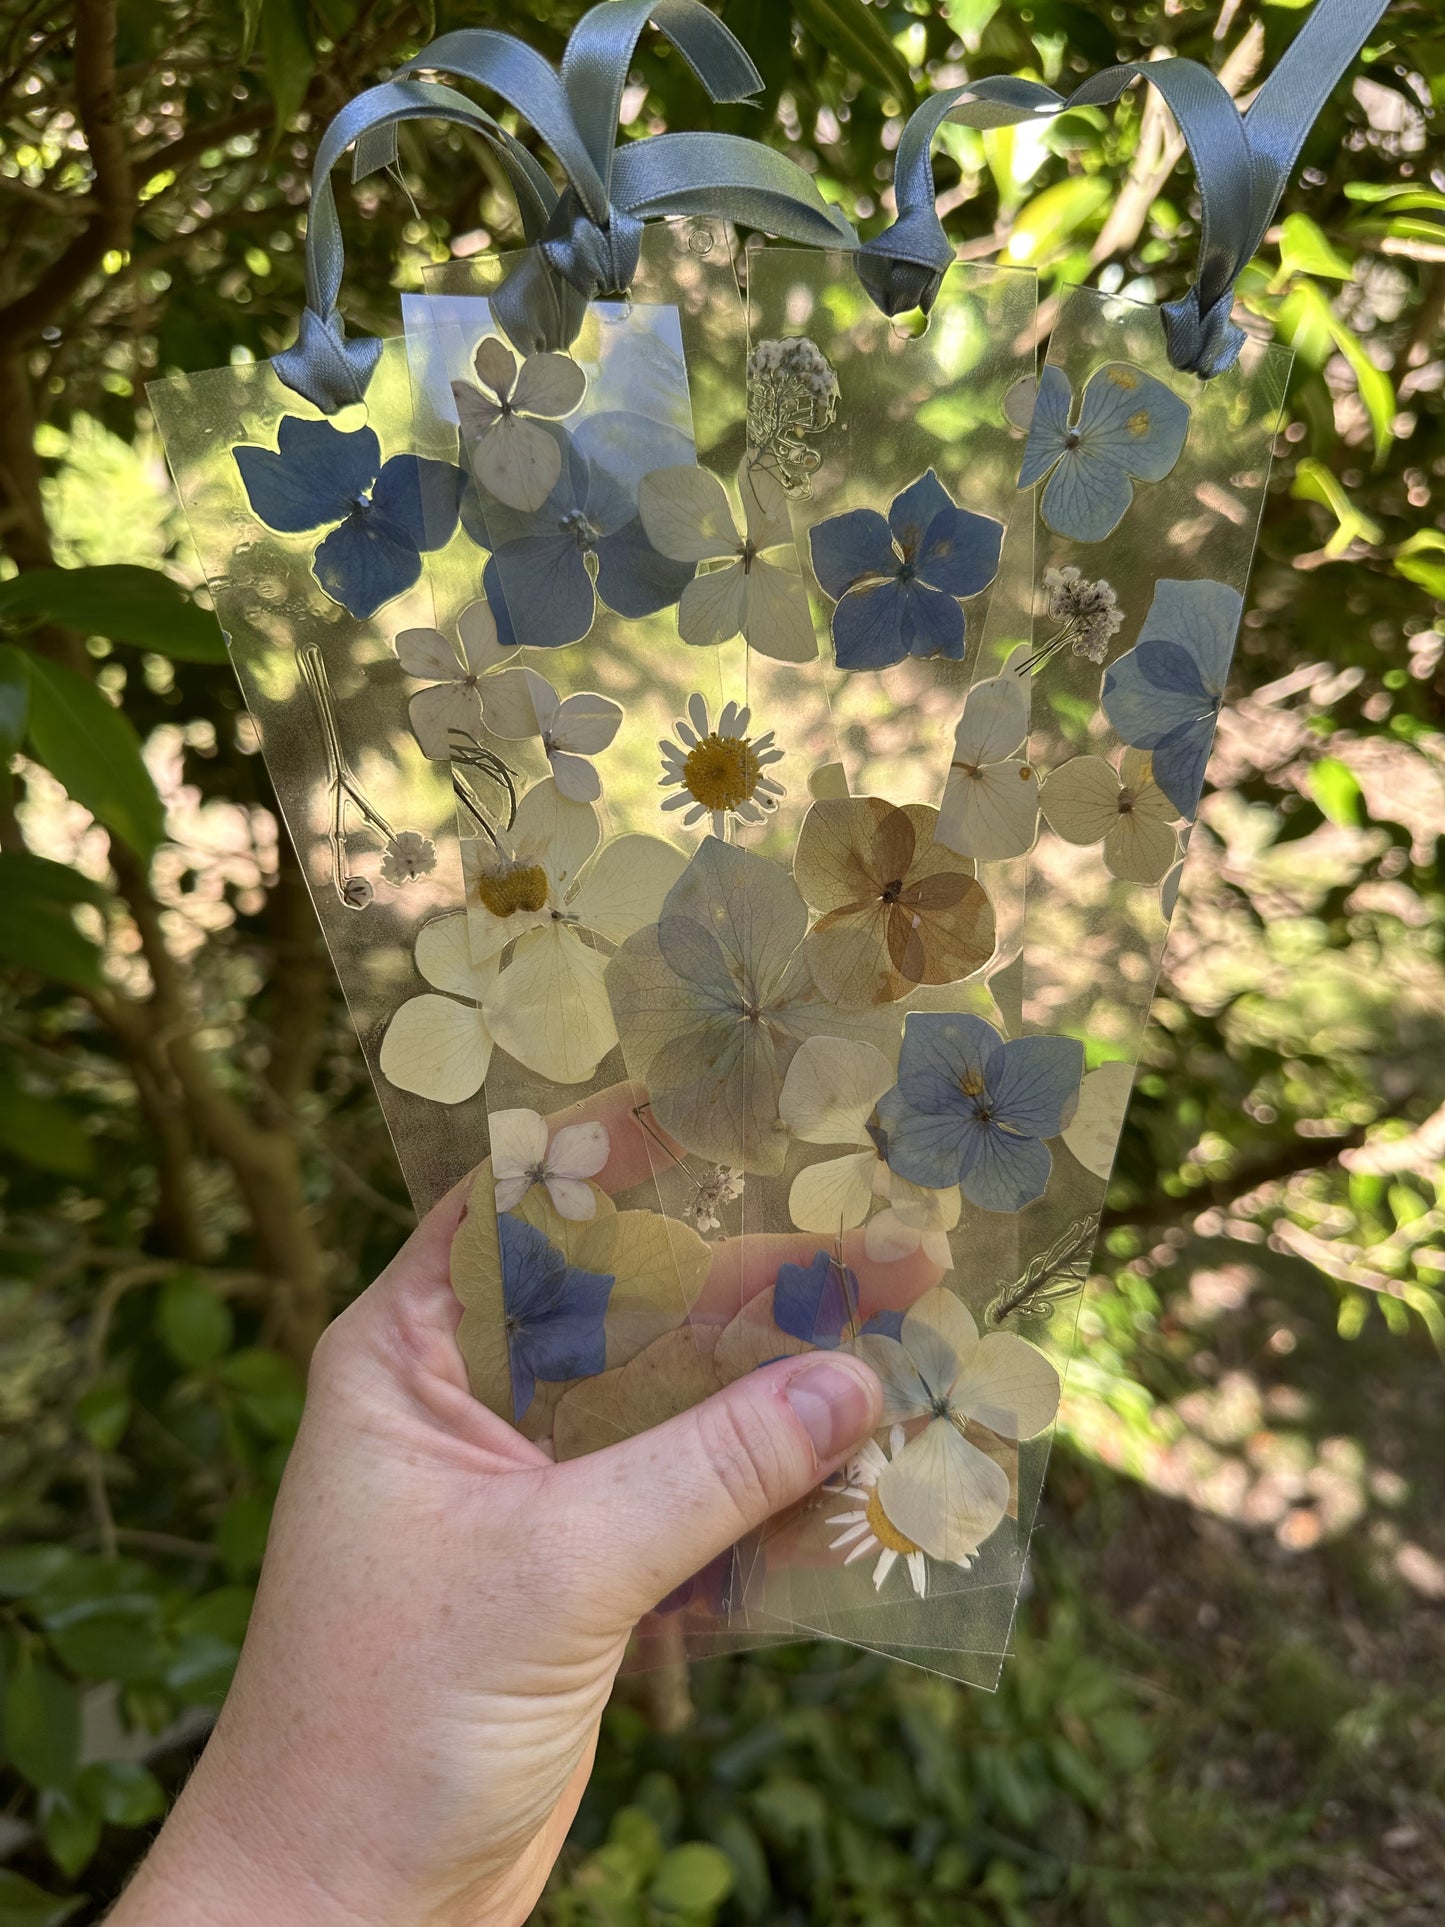 Pressed Flower Bookmarks